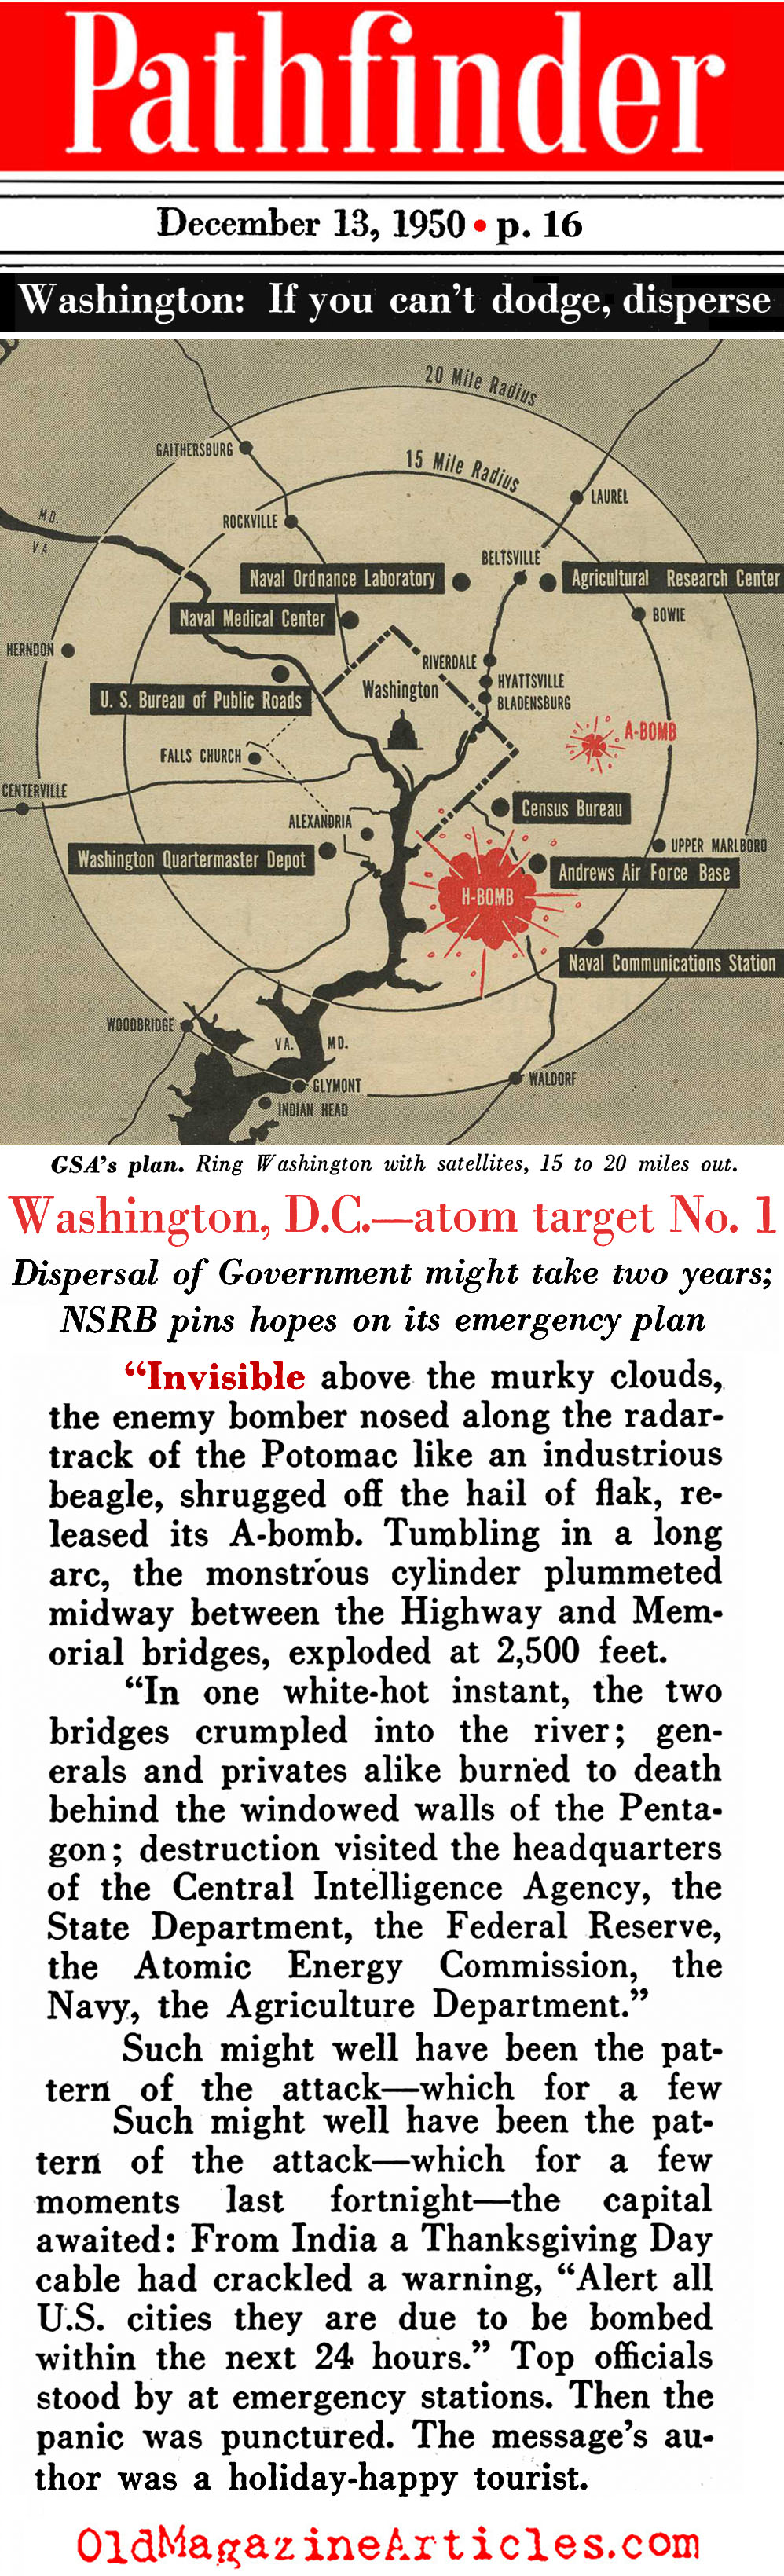 Ground Zero: Washington, D.C. (Pathfinder Magazine, 1950)